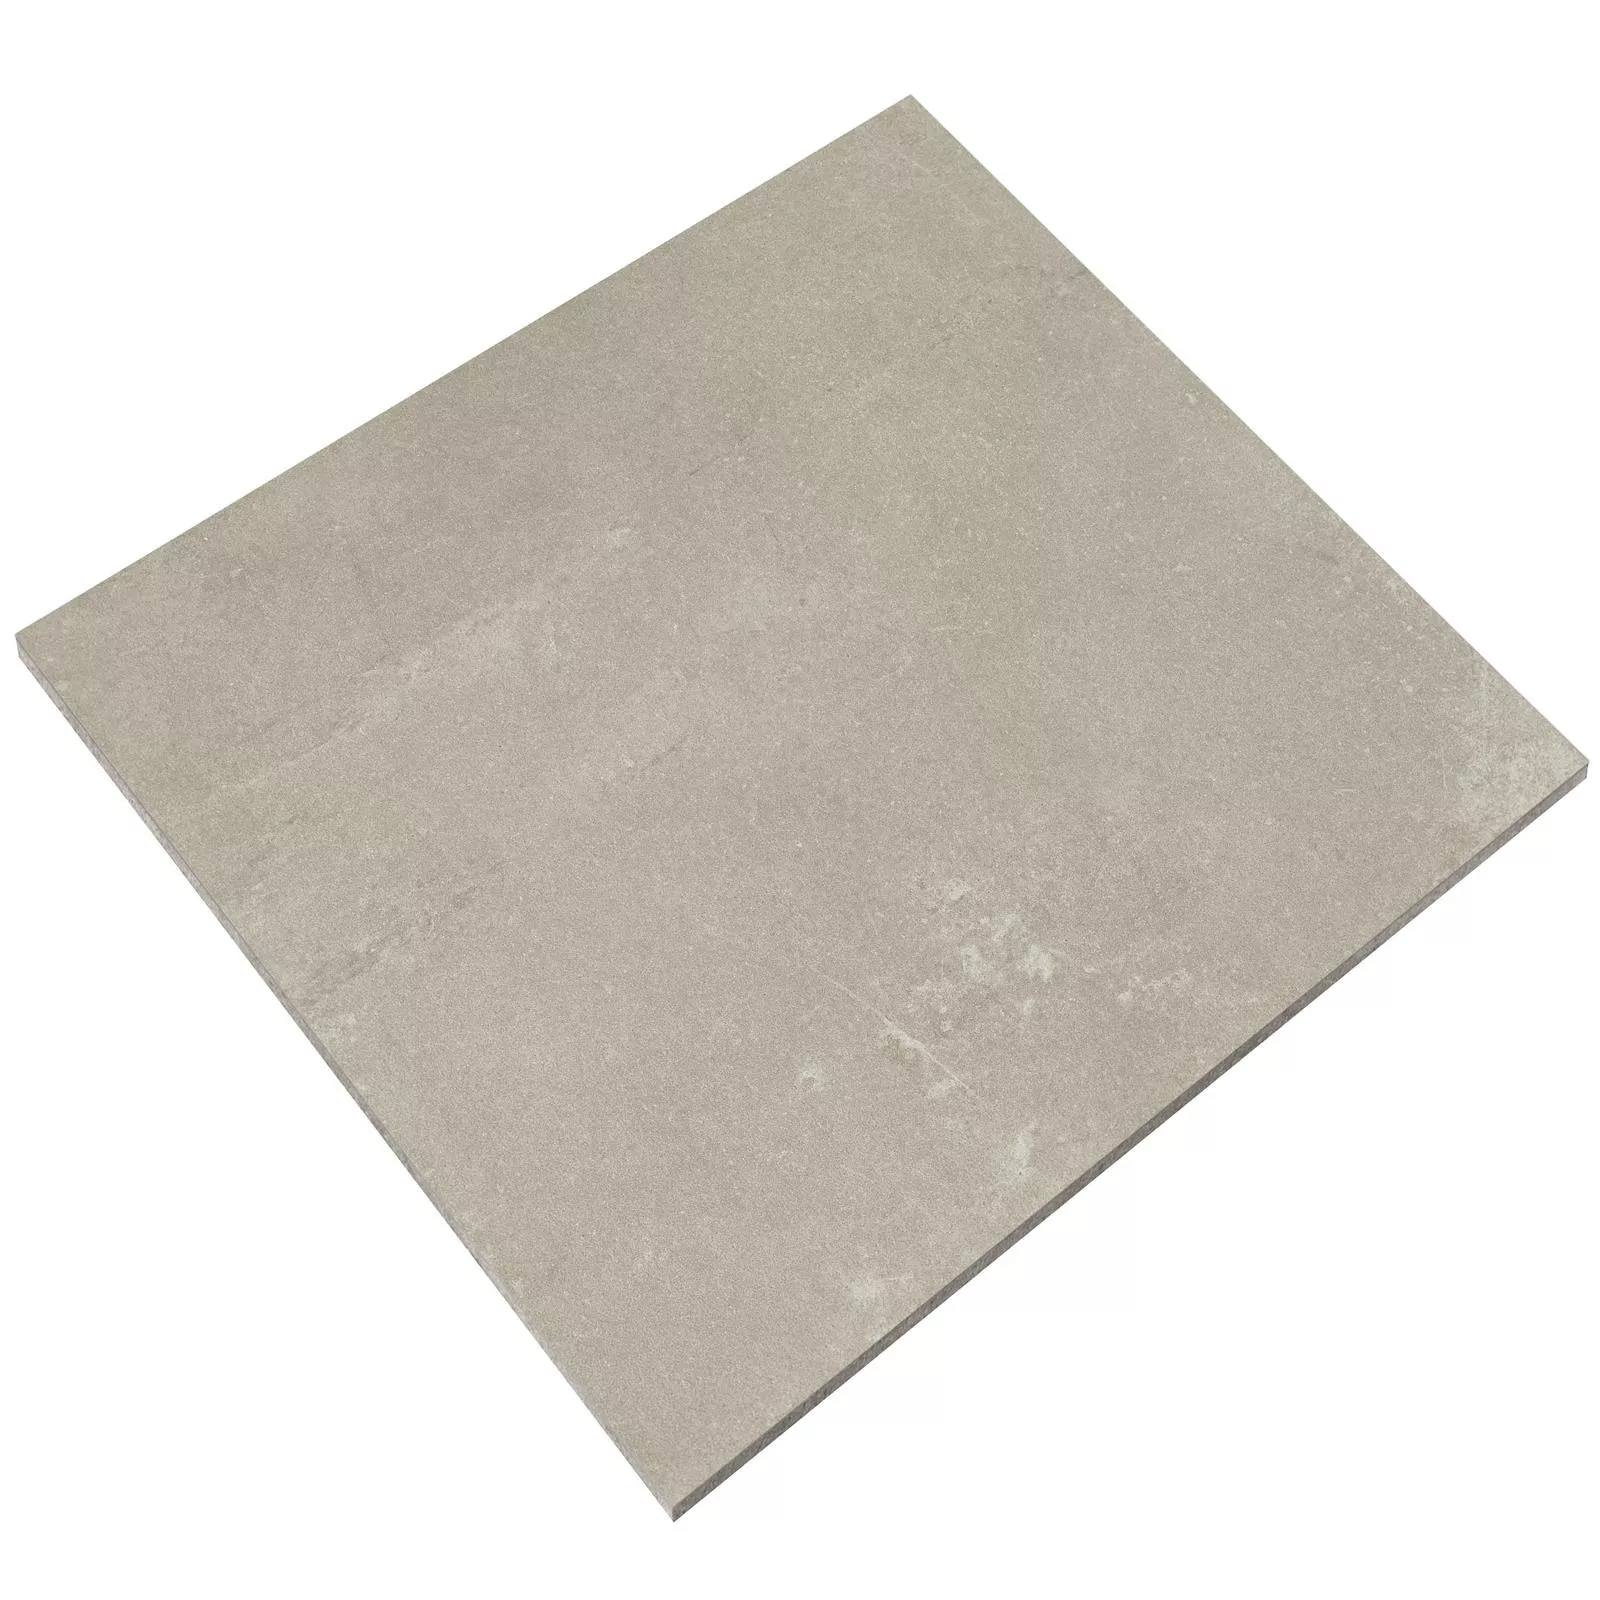 Podlahové Dlaždice Cementový Vzhled Nepal Slim Béžová 100x100cm